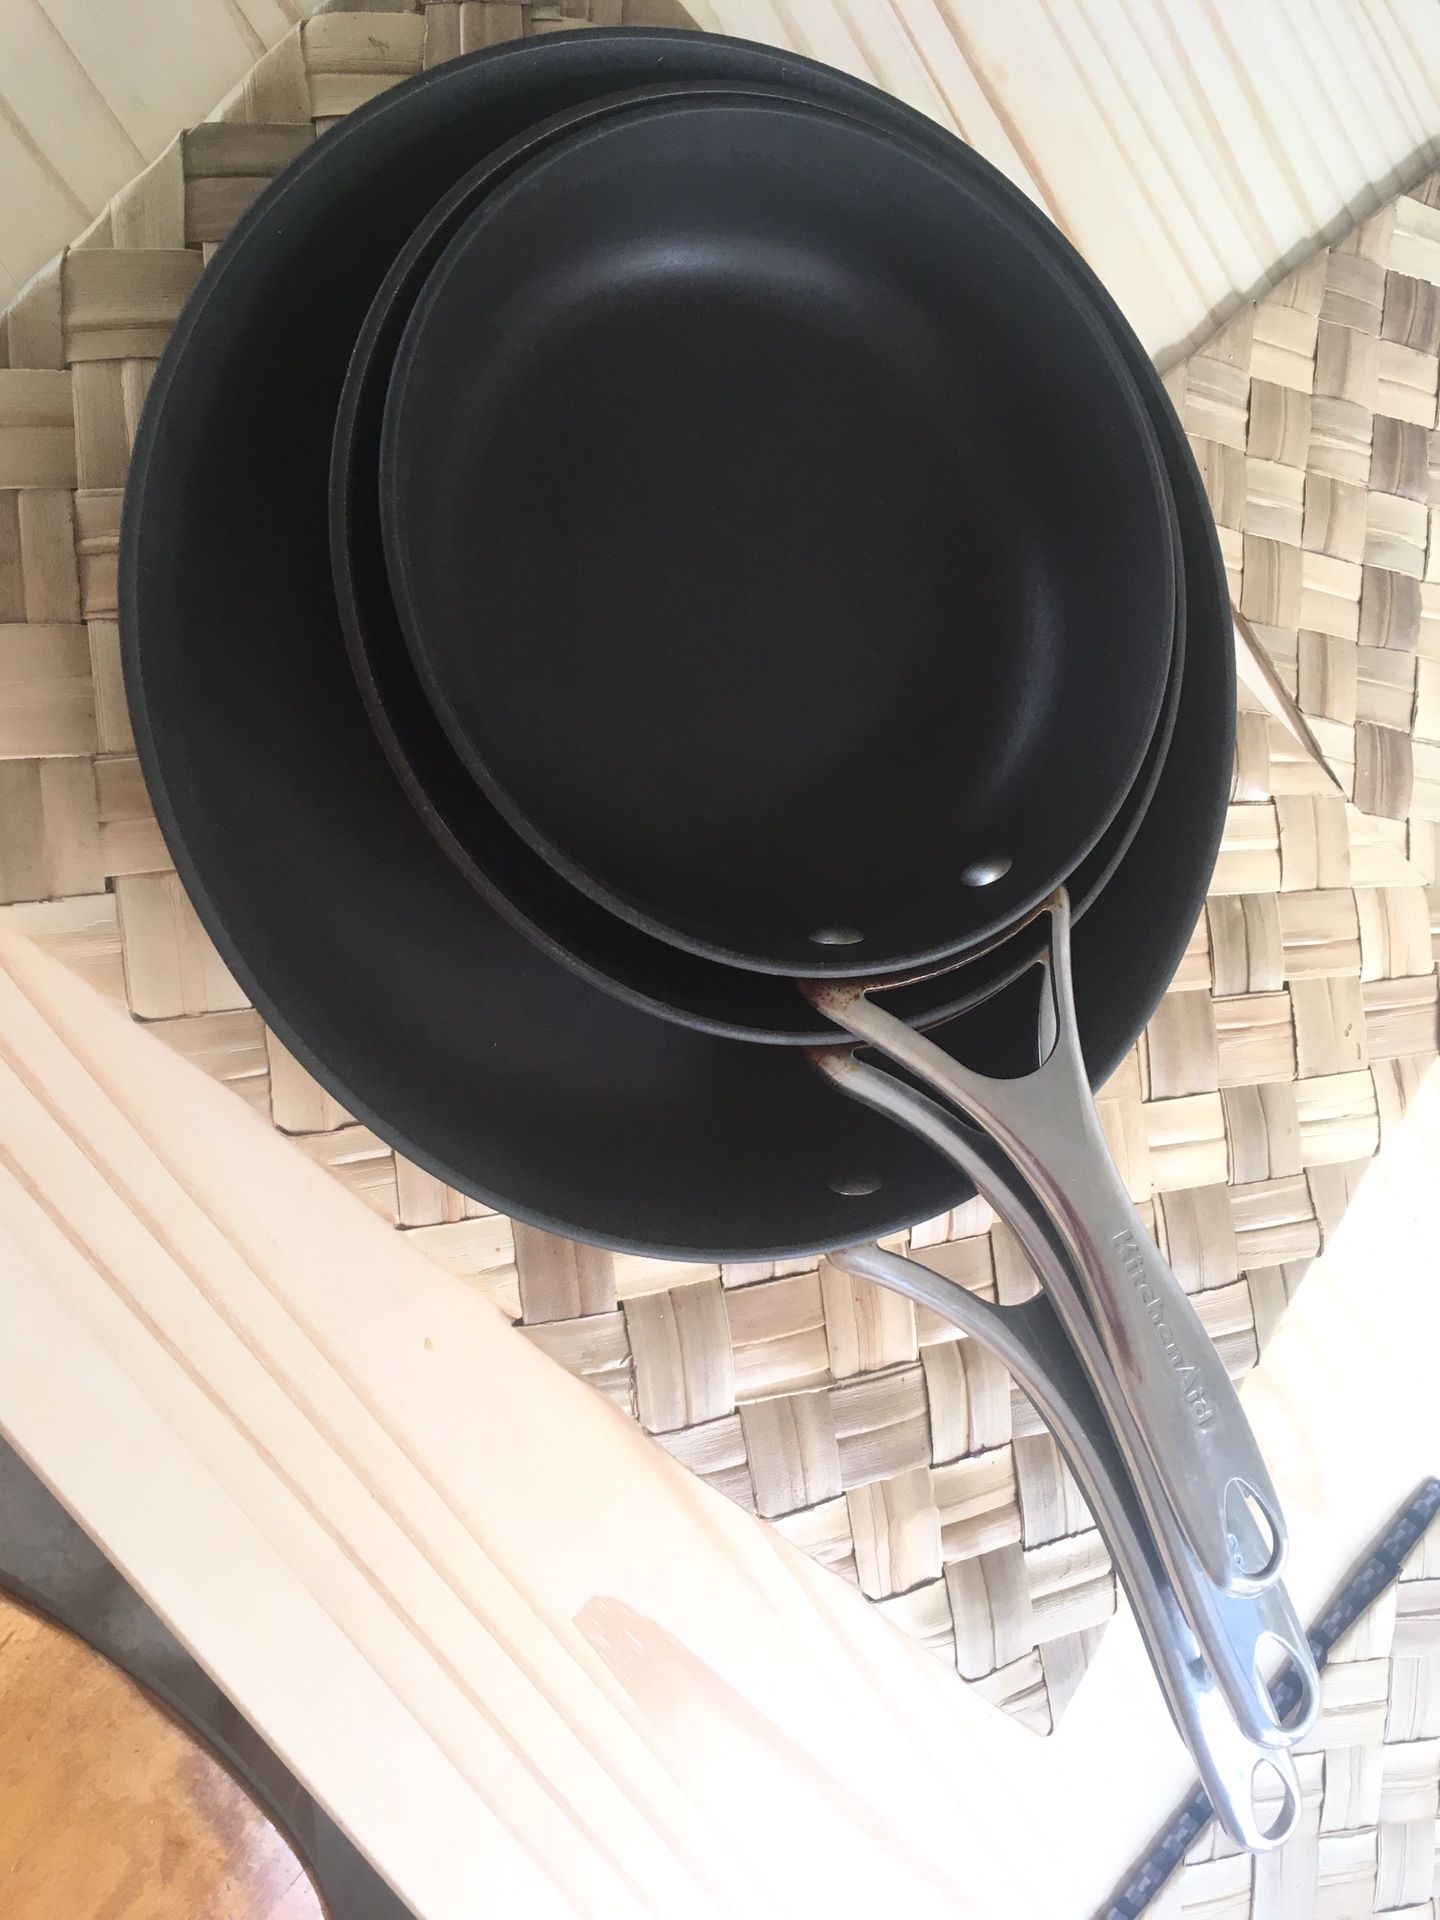 KitchenAid fry pans